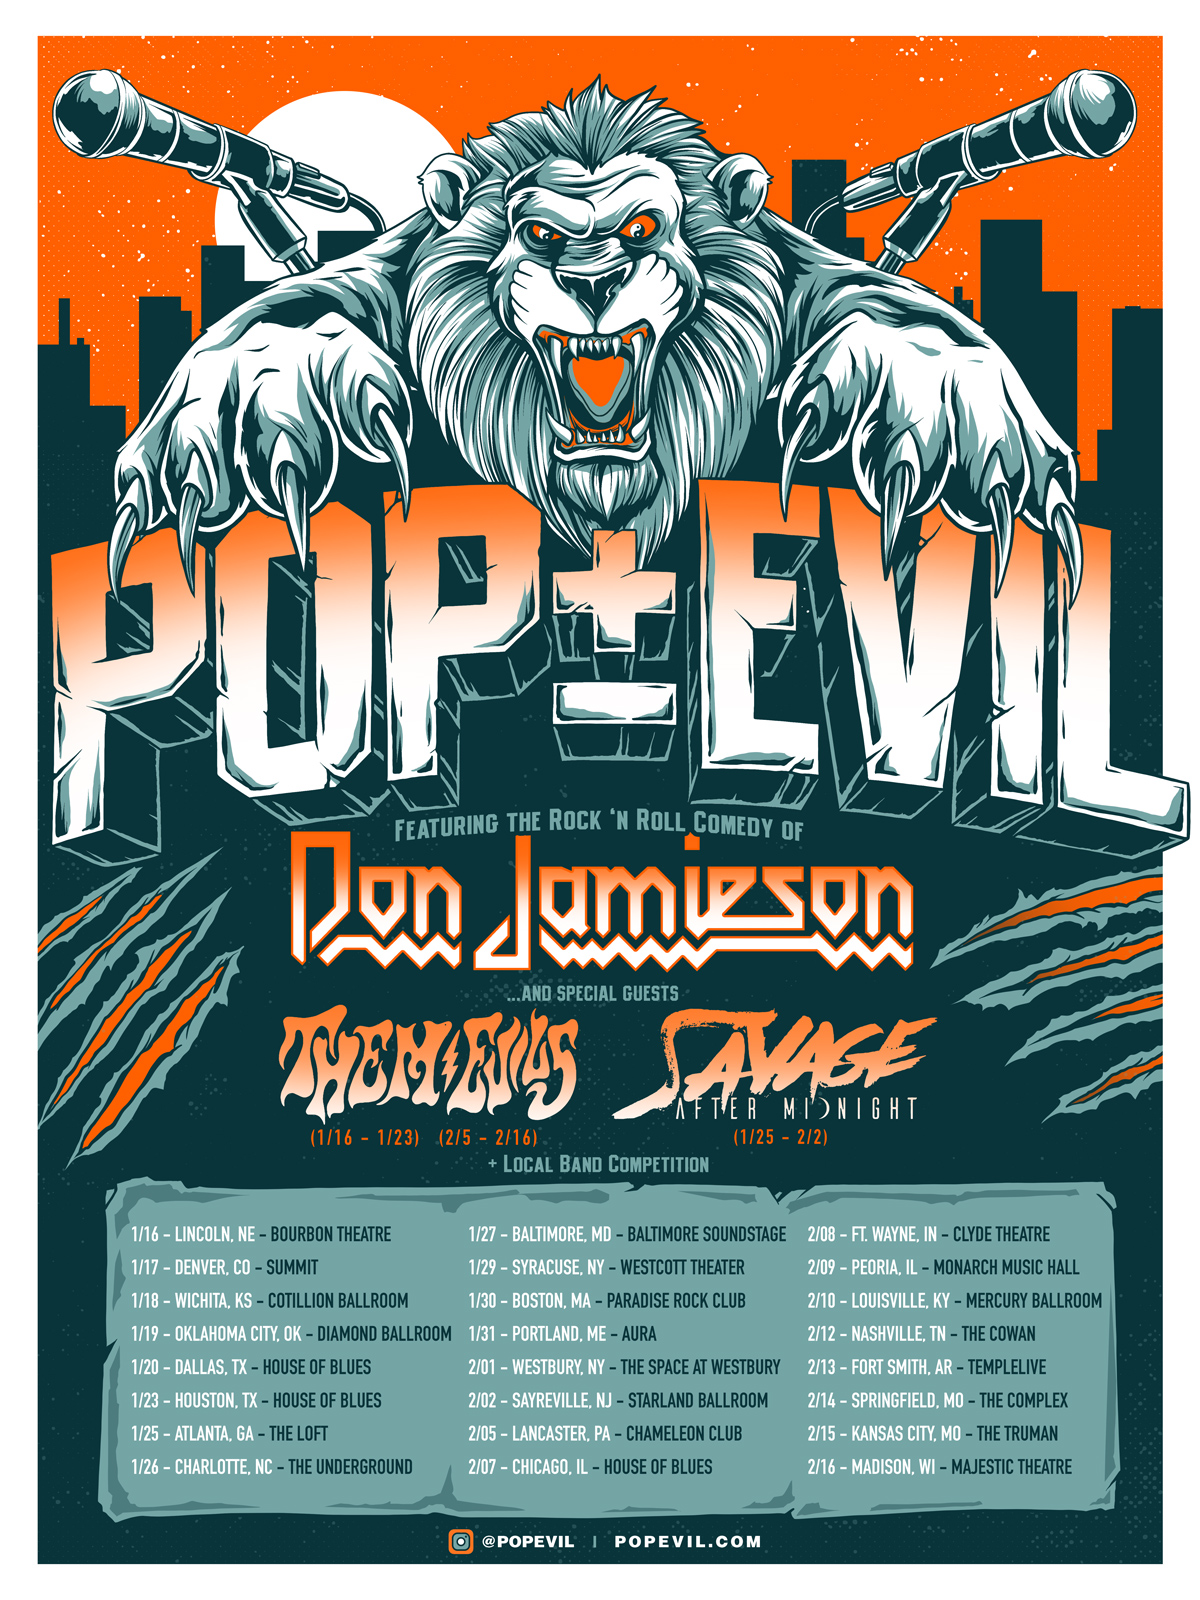 Pop Evil Announce U.S. Headline Tour, Don Jamieson to Support